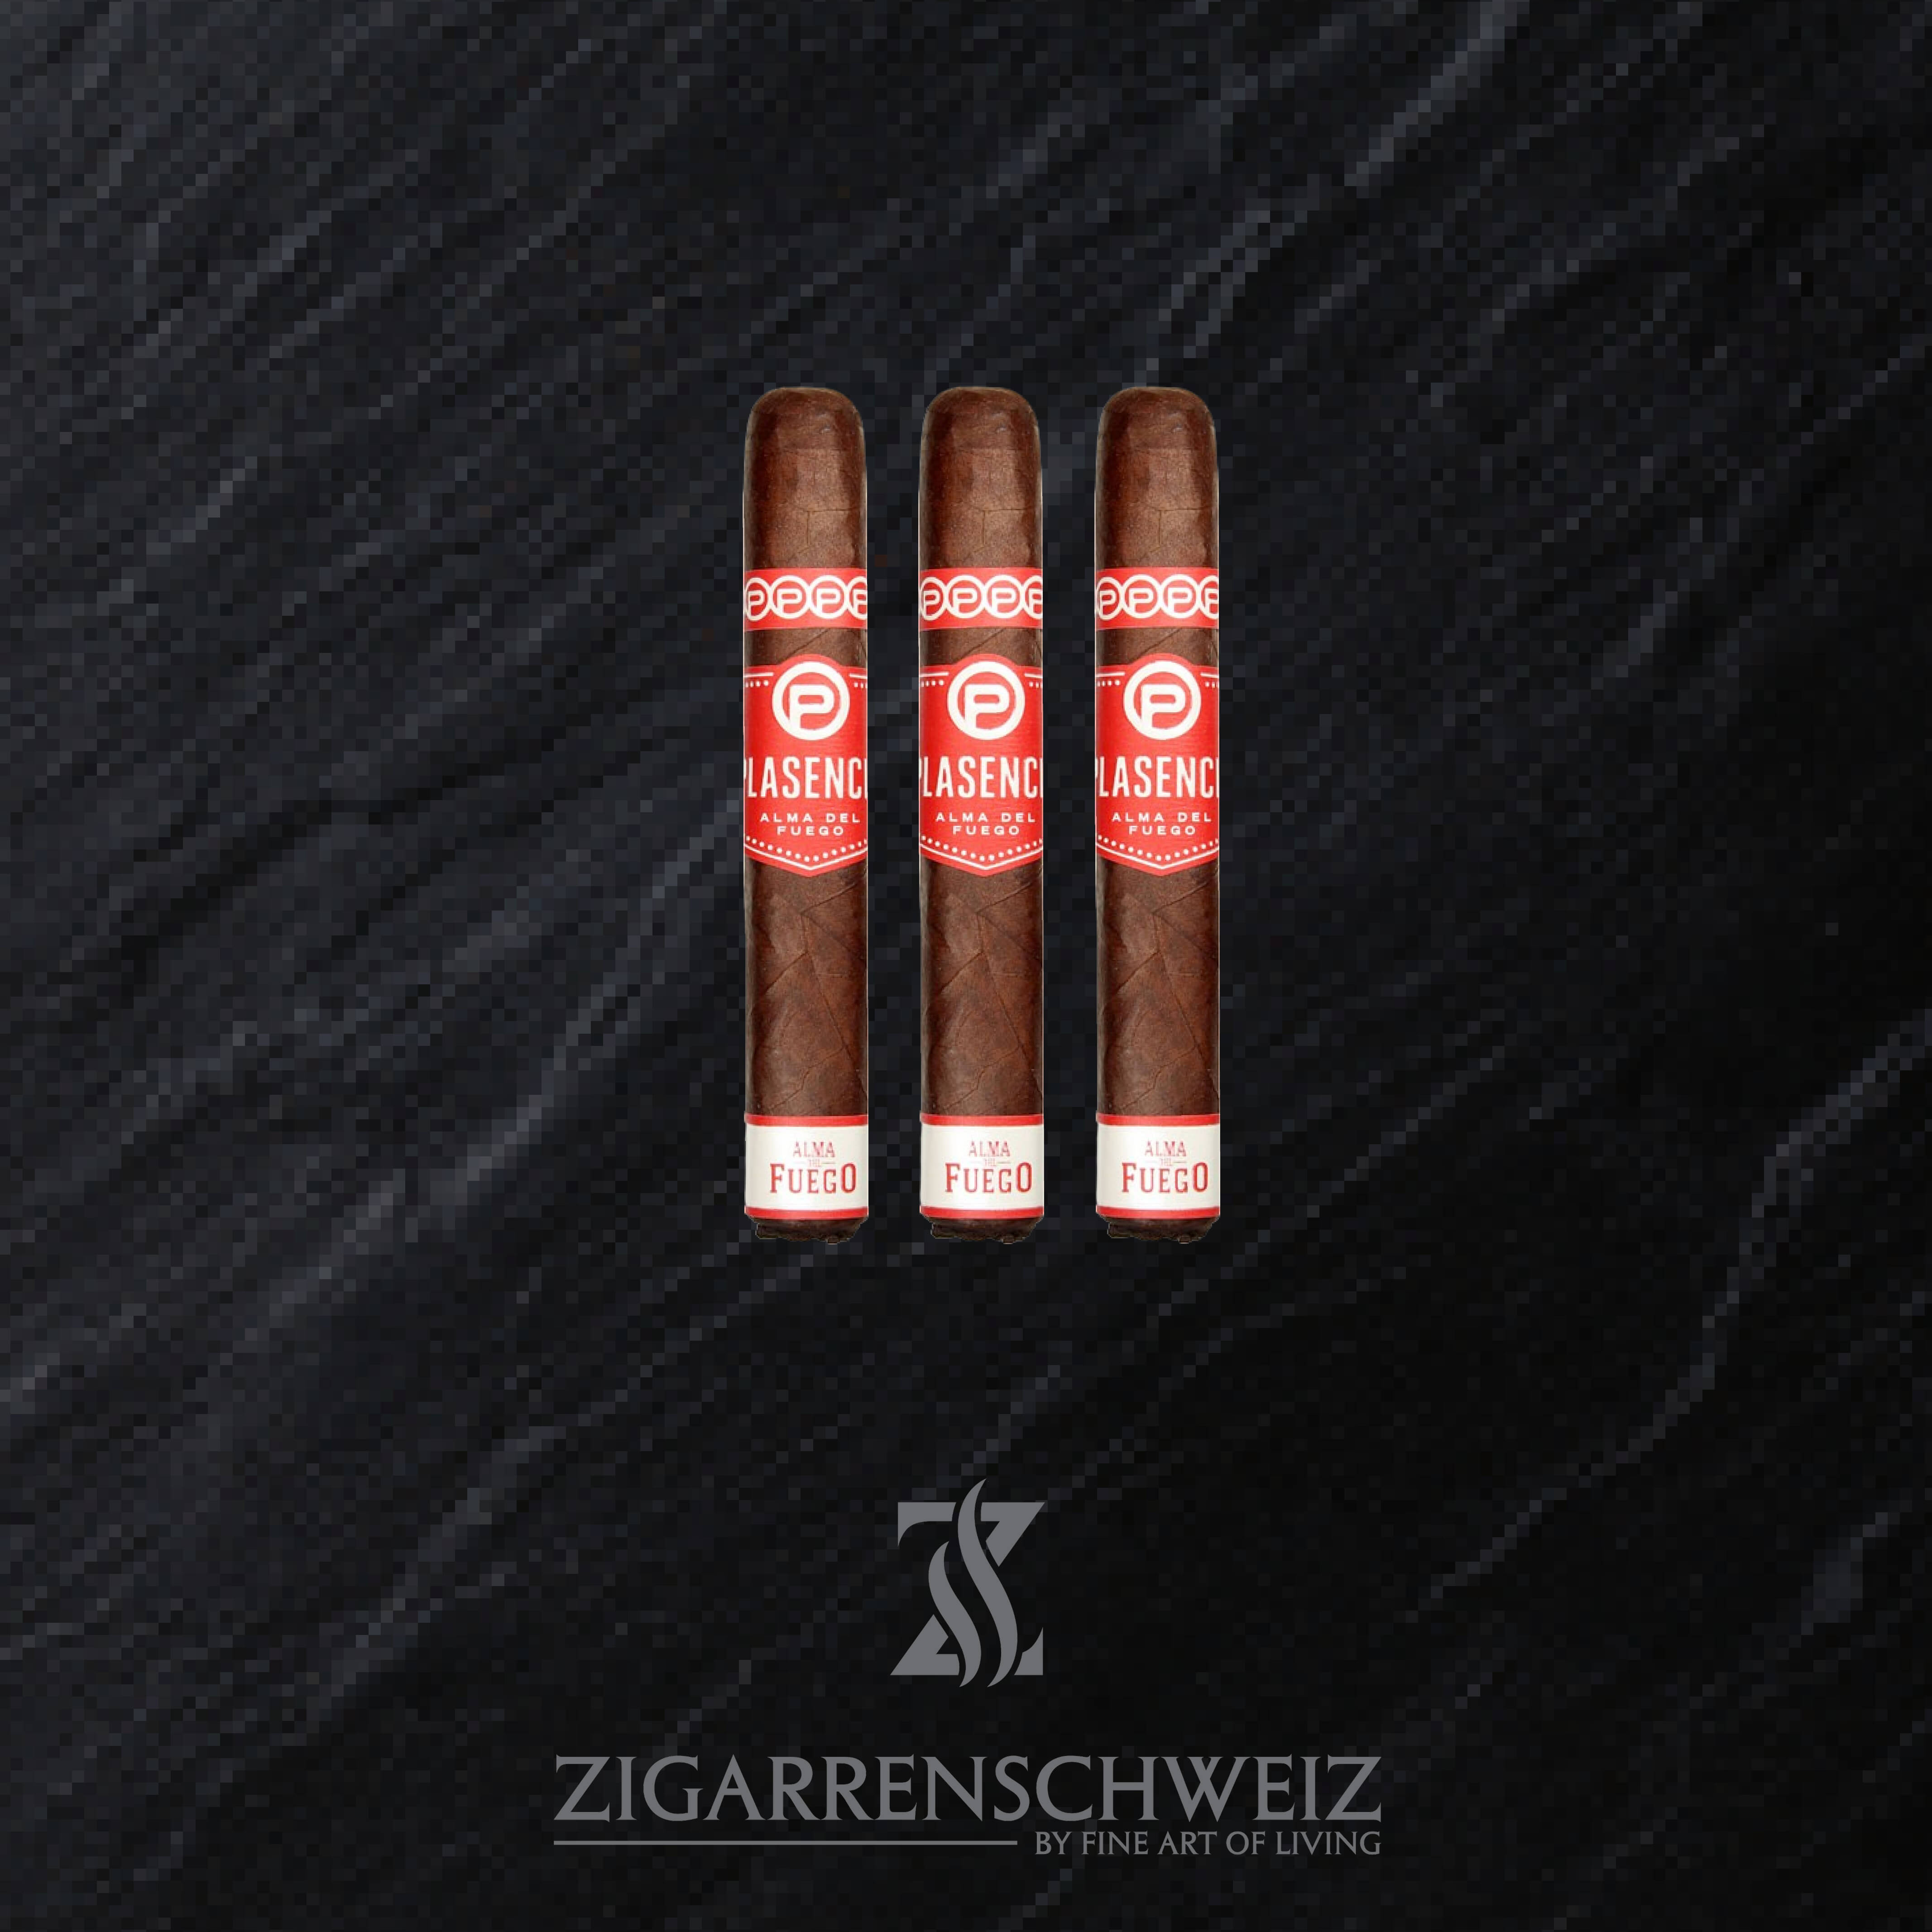 3er Etui Plasencia Alma del Fuego Candente Zigarren im Robusto Format